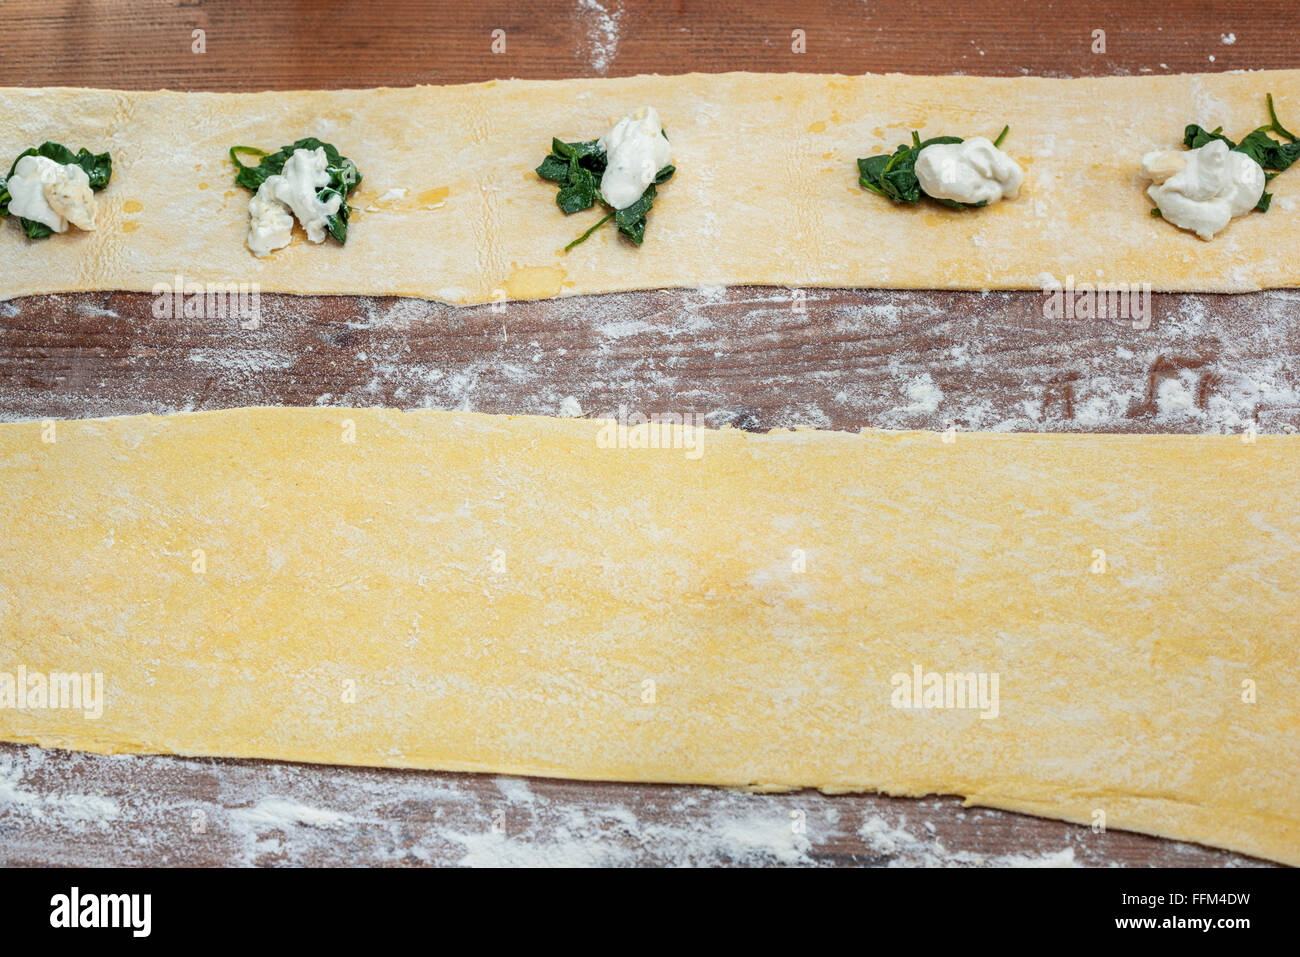 Raviolis de pasta hecha a mano mano cocina espinacas ricota Cotta pasta Ravioli de sello sello cortar queso crema de queso huevos de oliv Foto de stock